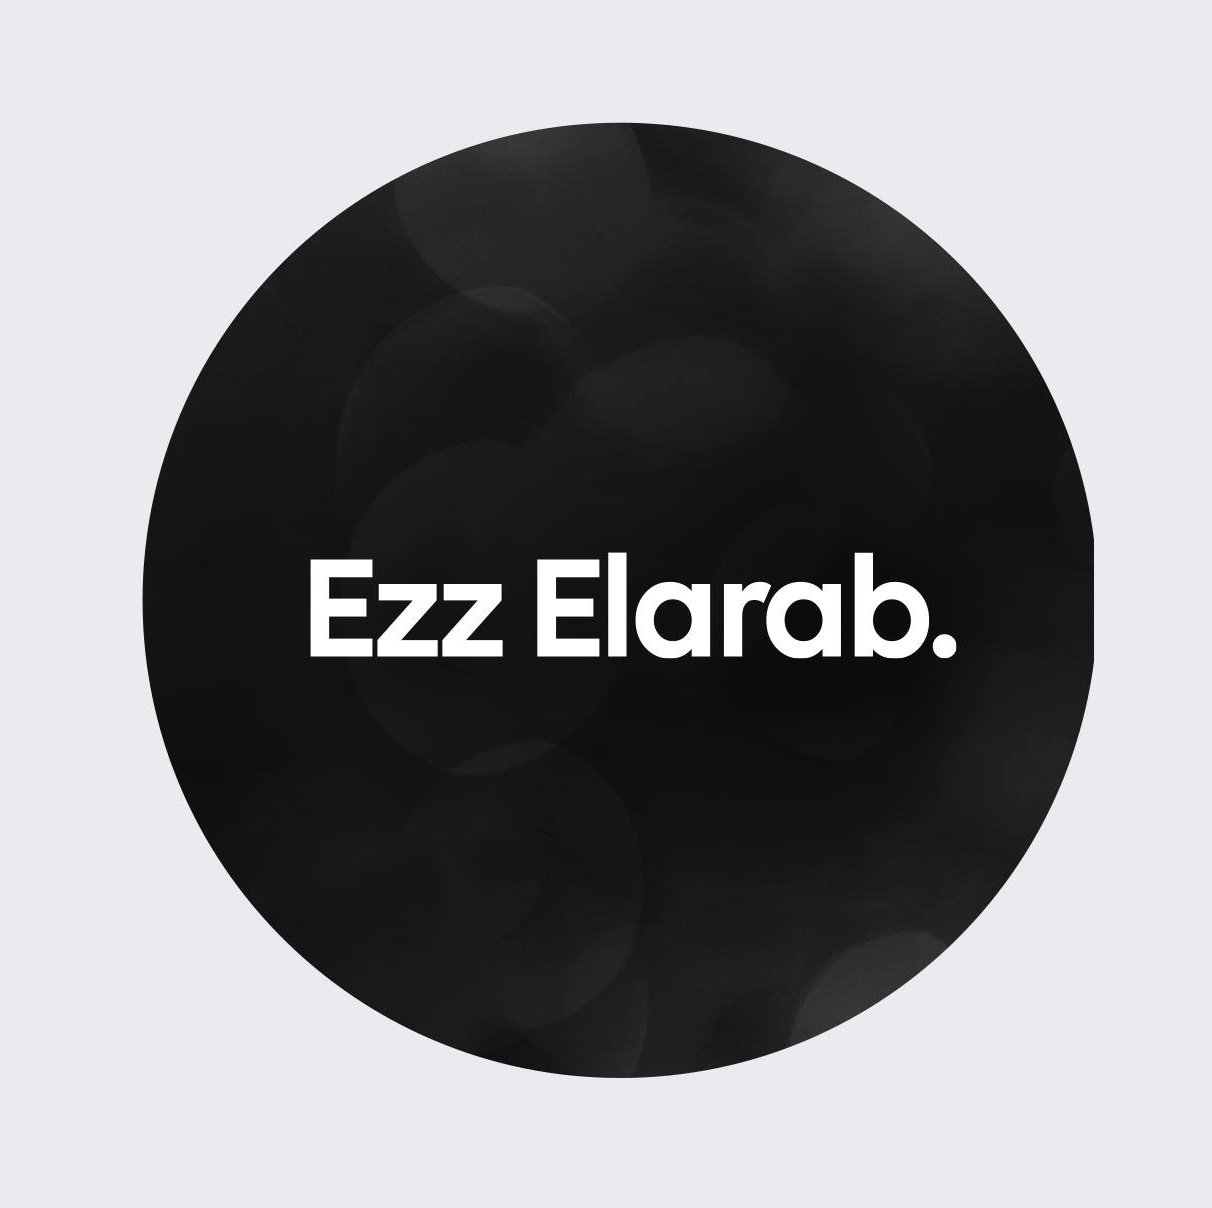 Ezz Elarab Automotive Group